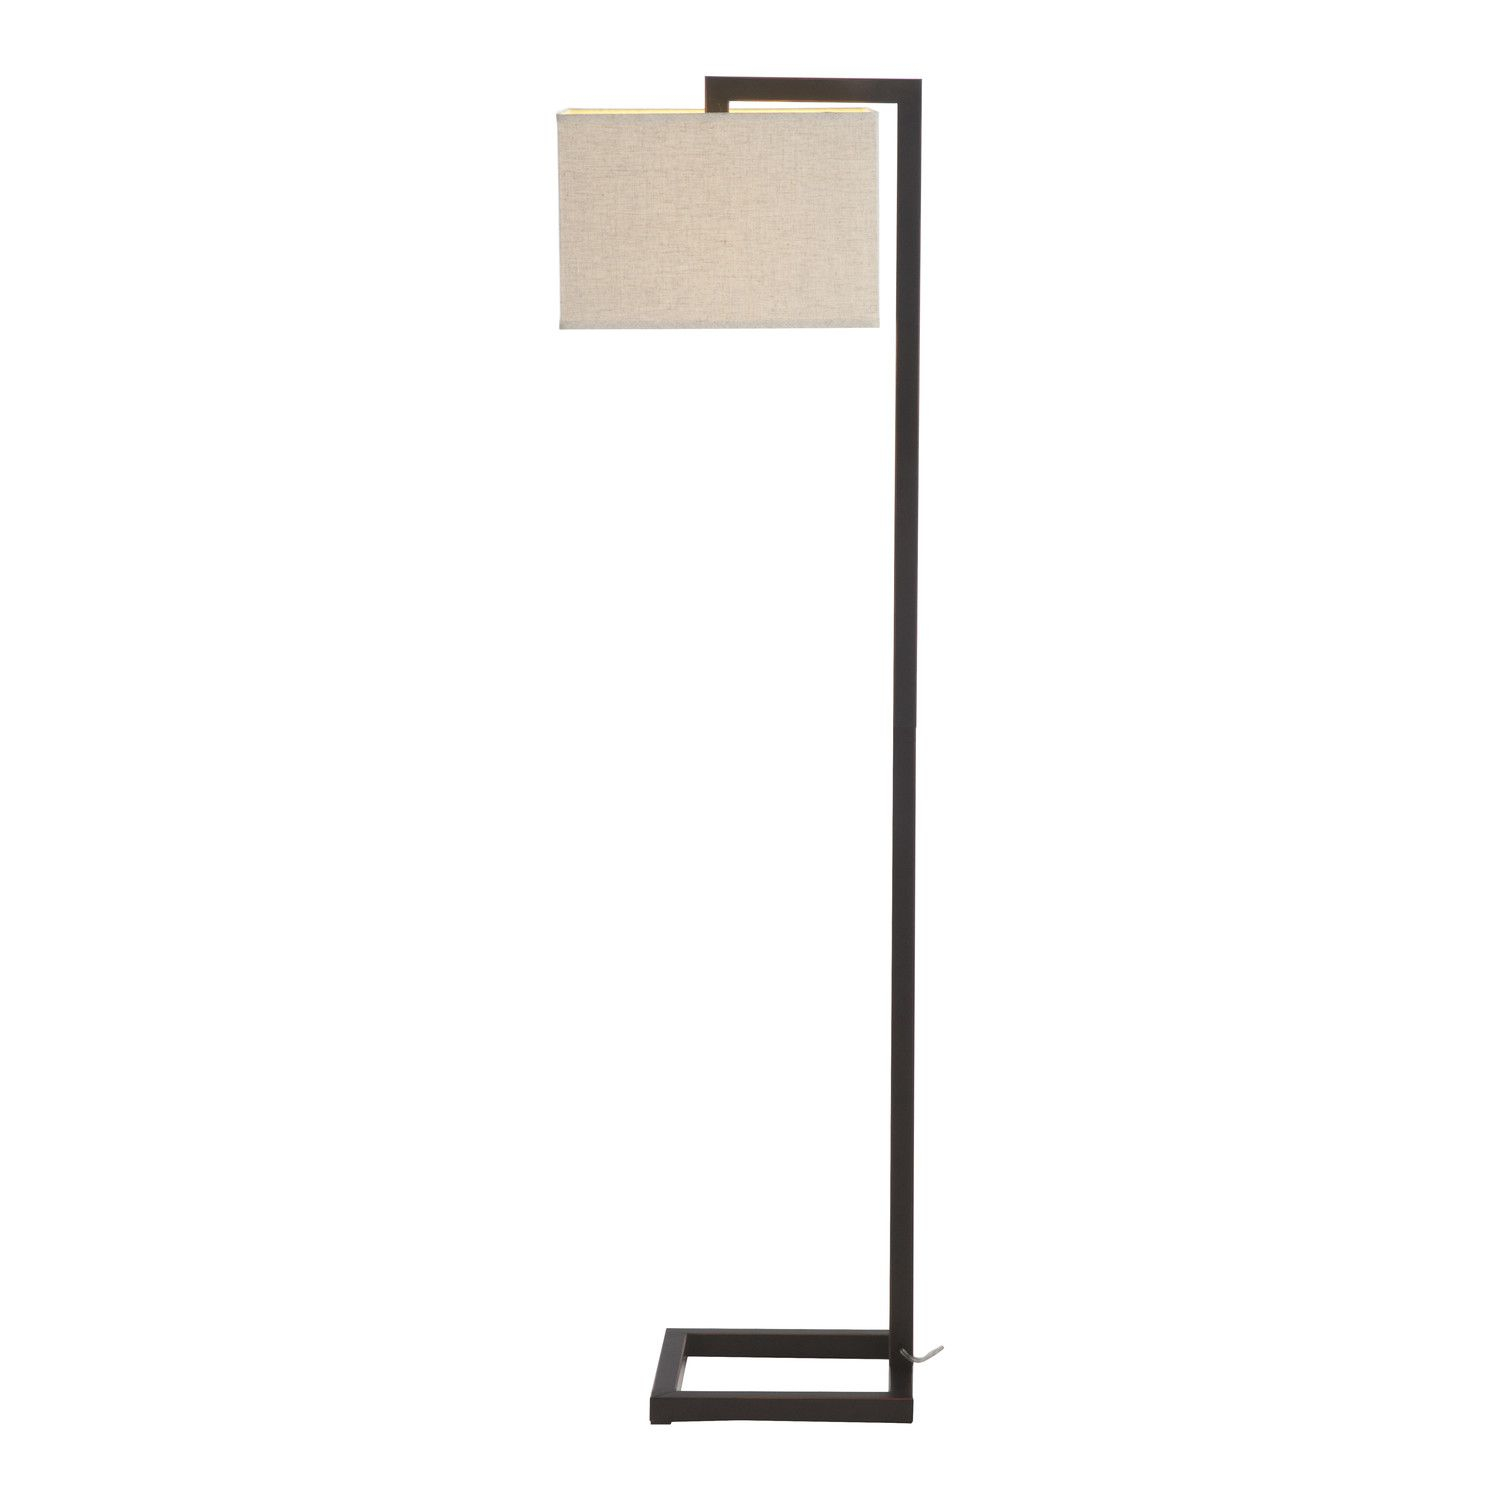 Brayden Studio Welton 64 Floor Lamp Home Decor Ideas intended for dimensions 1500 X 1500